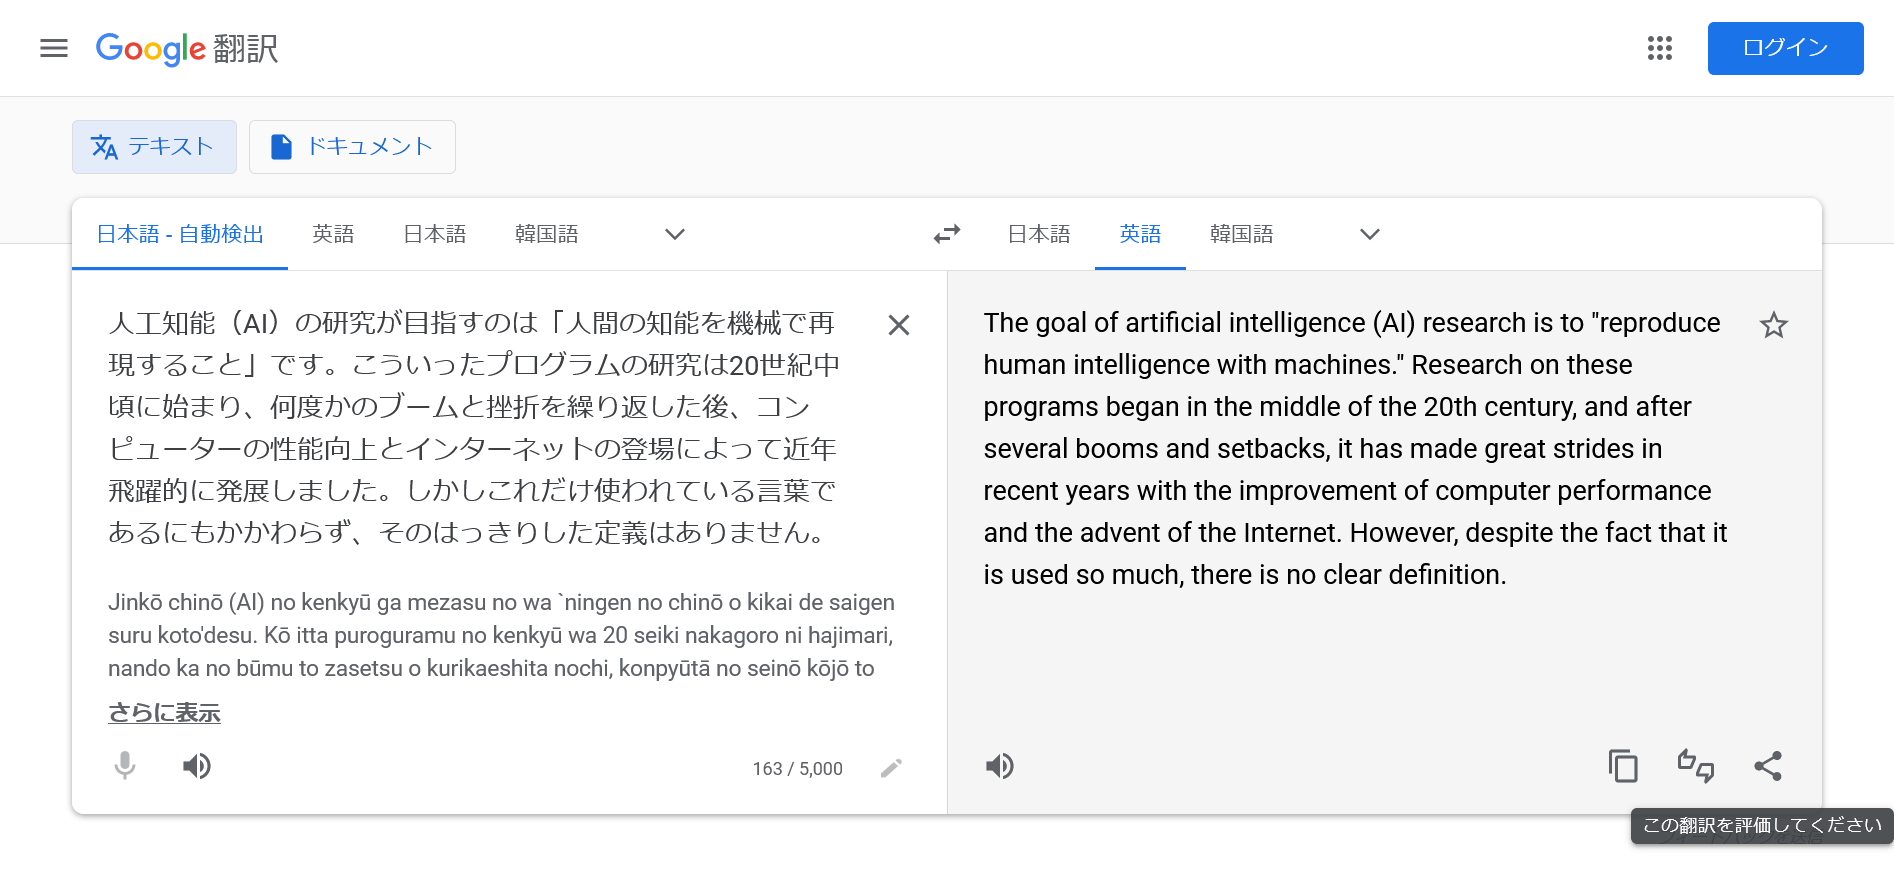 Google翻訳で人工知能の定義を訳した画面のスクリーンショット